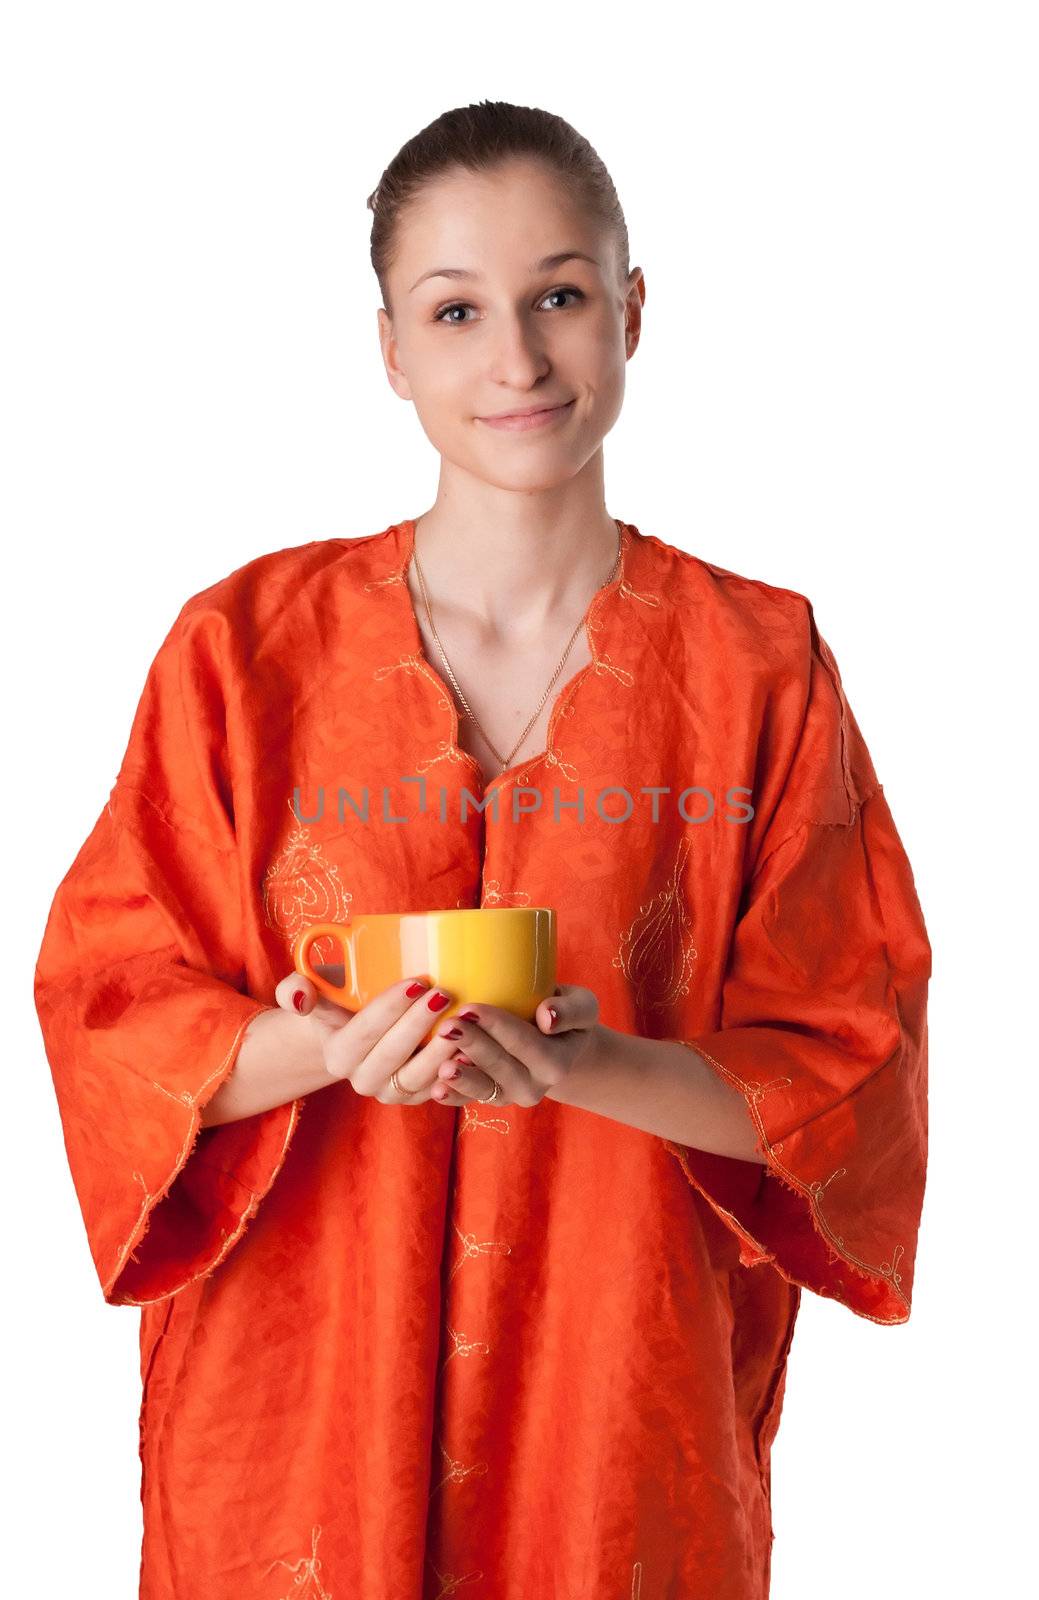 The girl in the orange robe offers tea studio photography